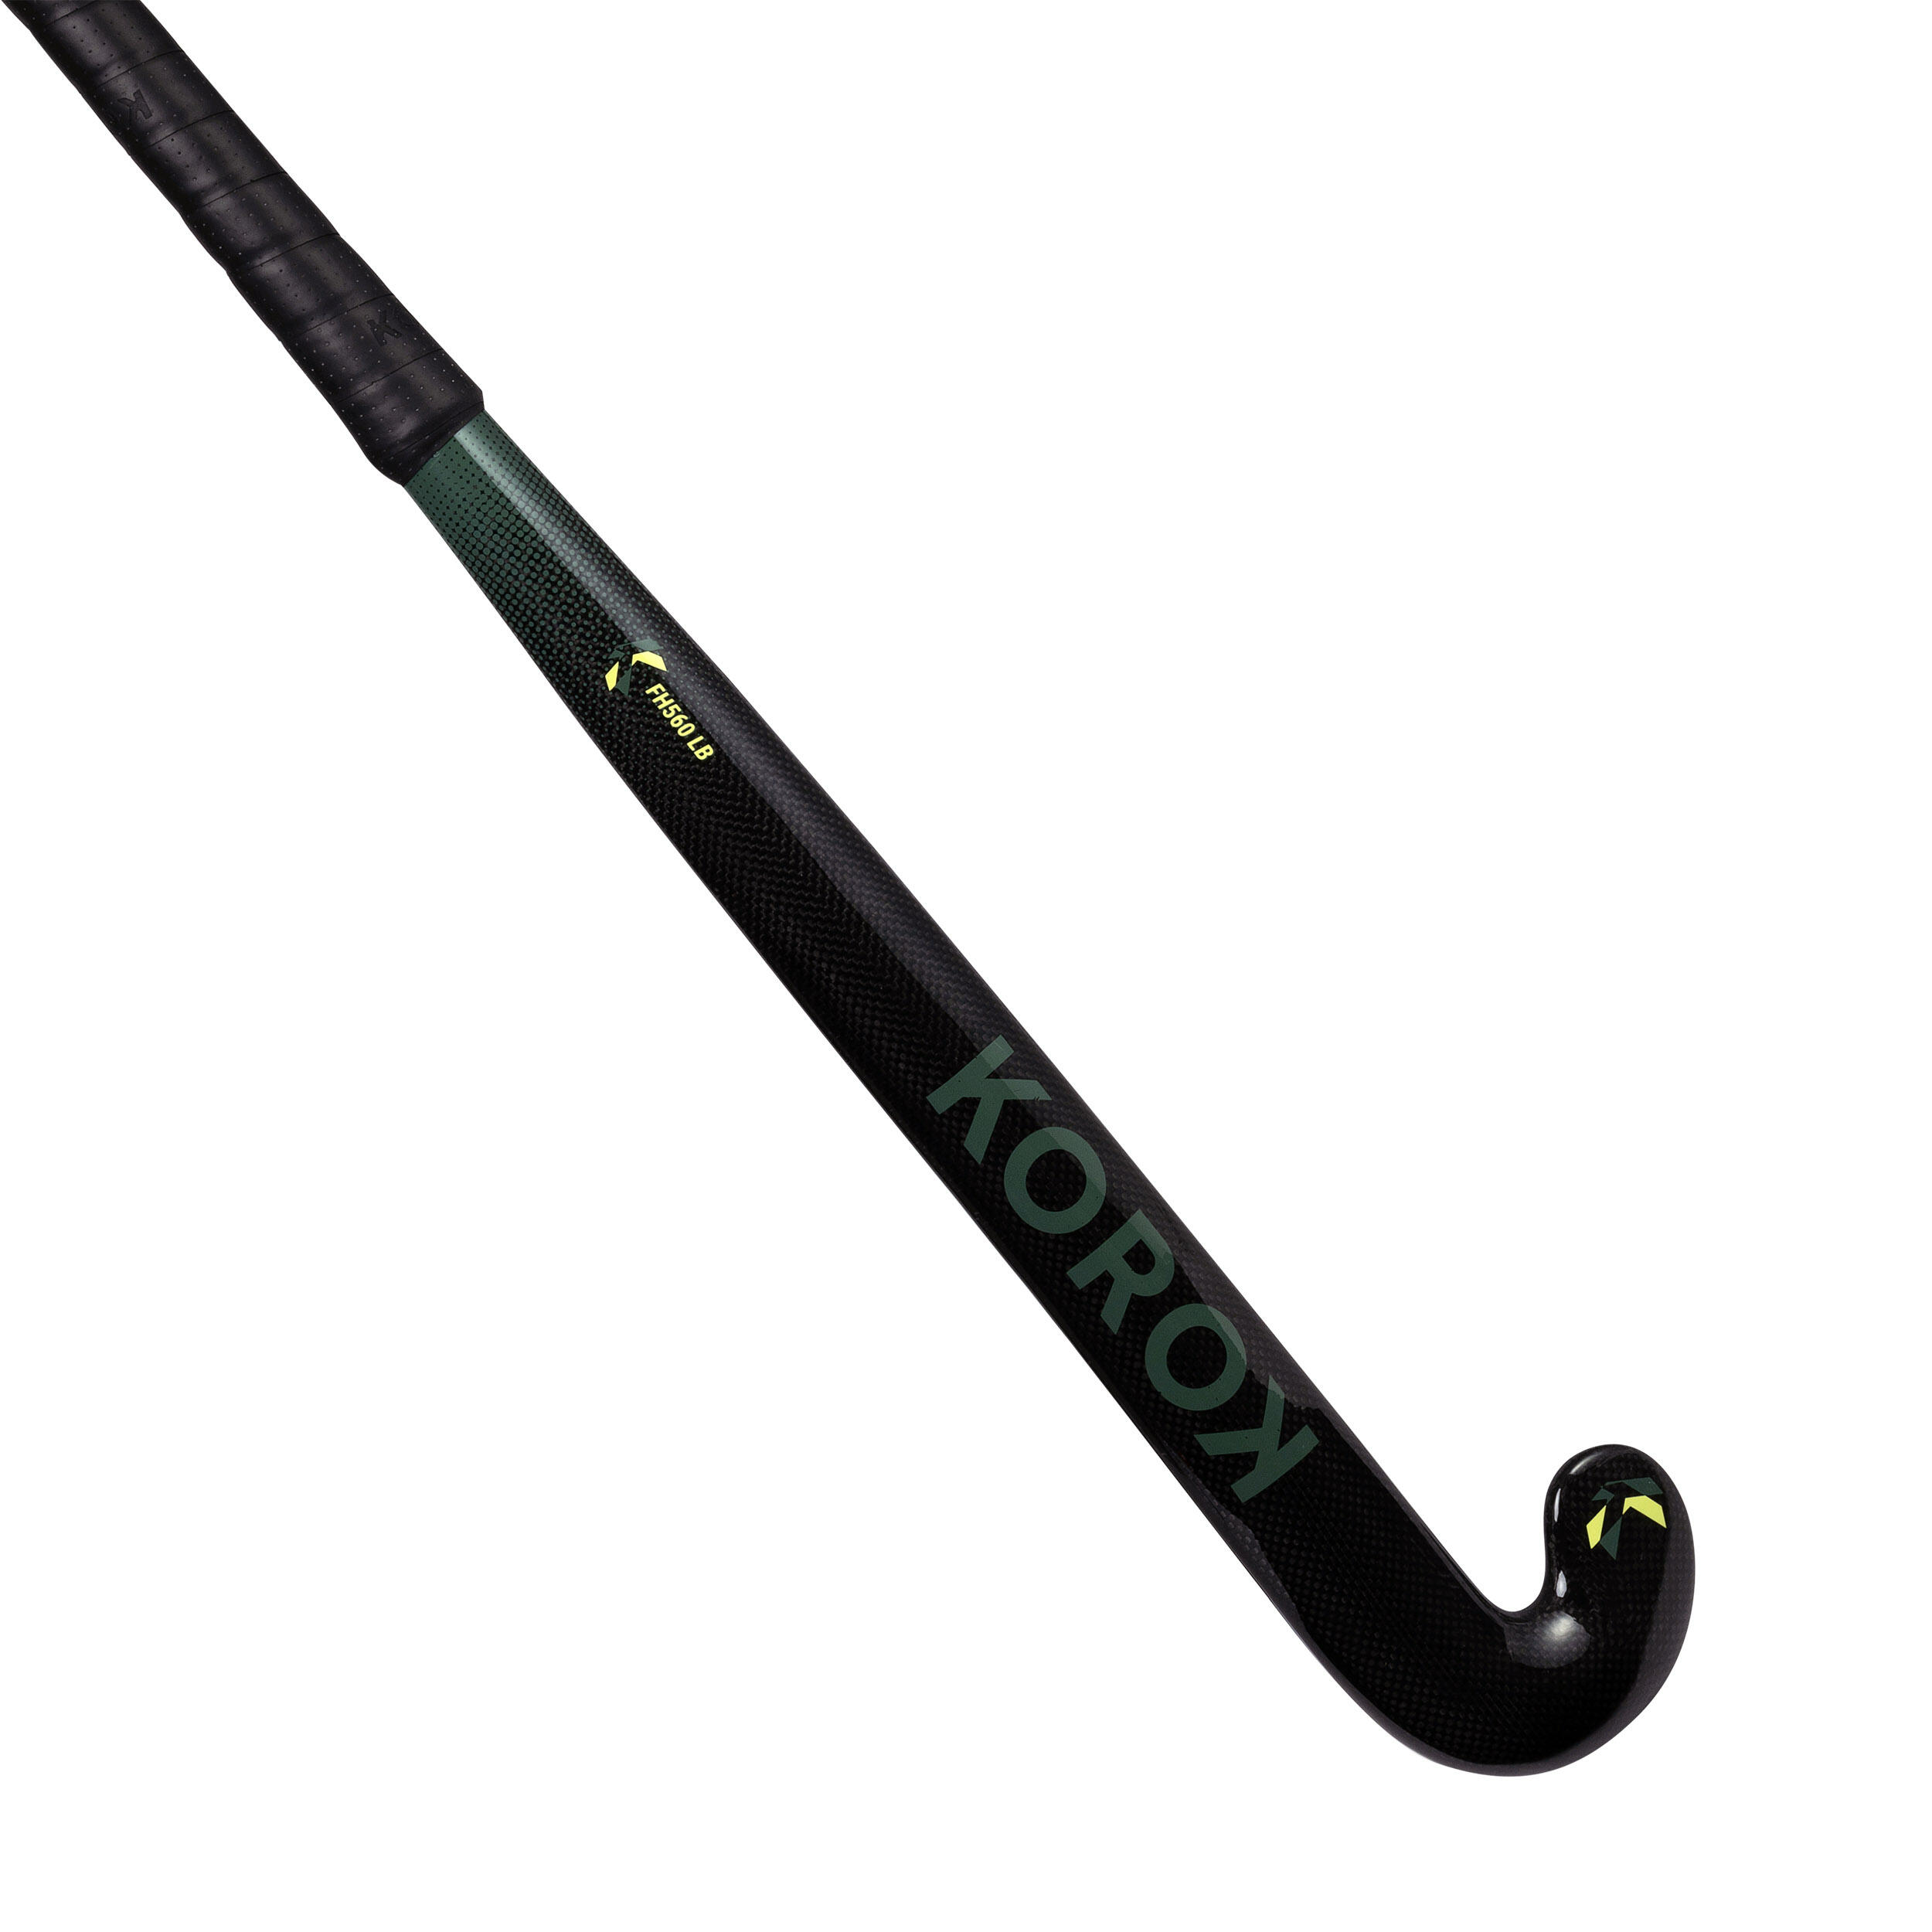 KOROK Adult Intermediate 60% Carbon Low Bow Field Hockey Stick FH560 - Black/Khaki